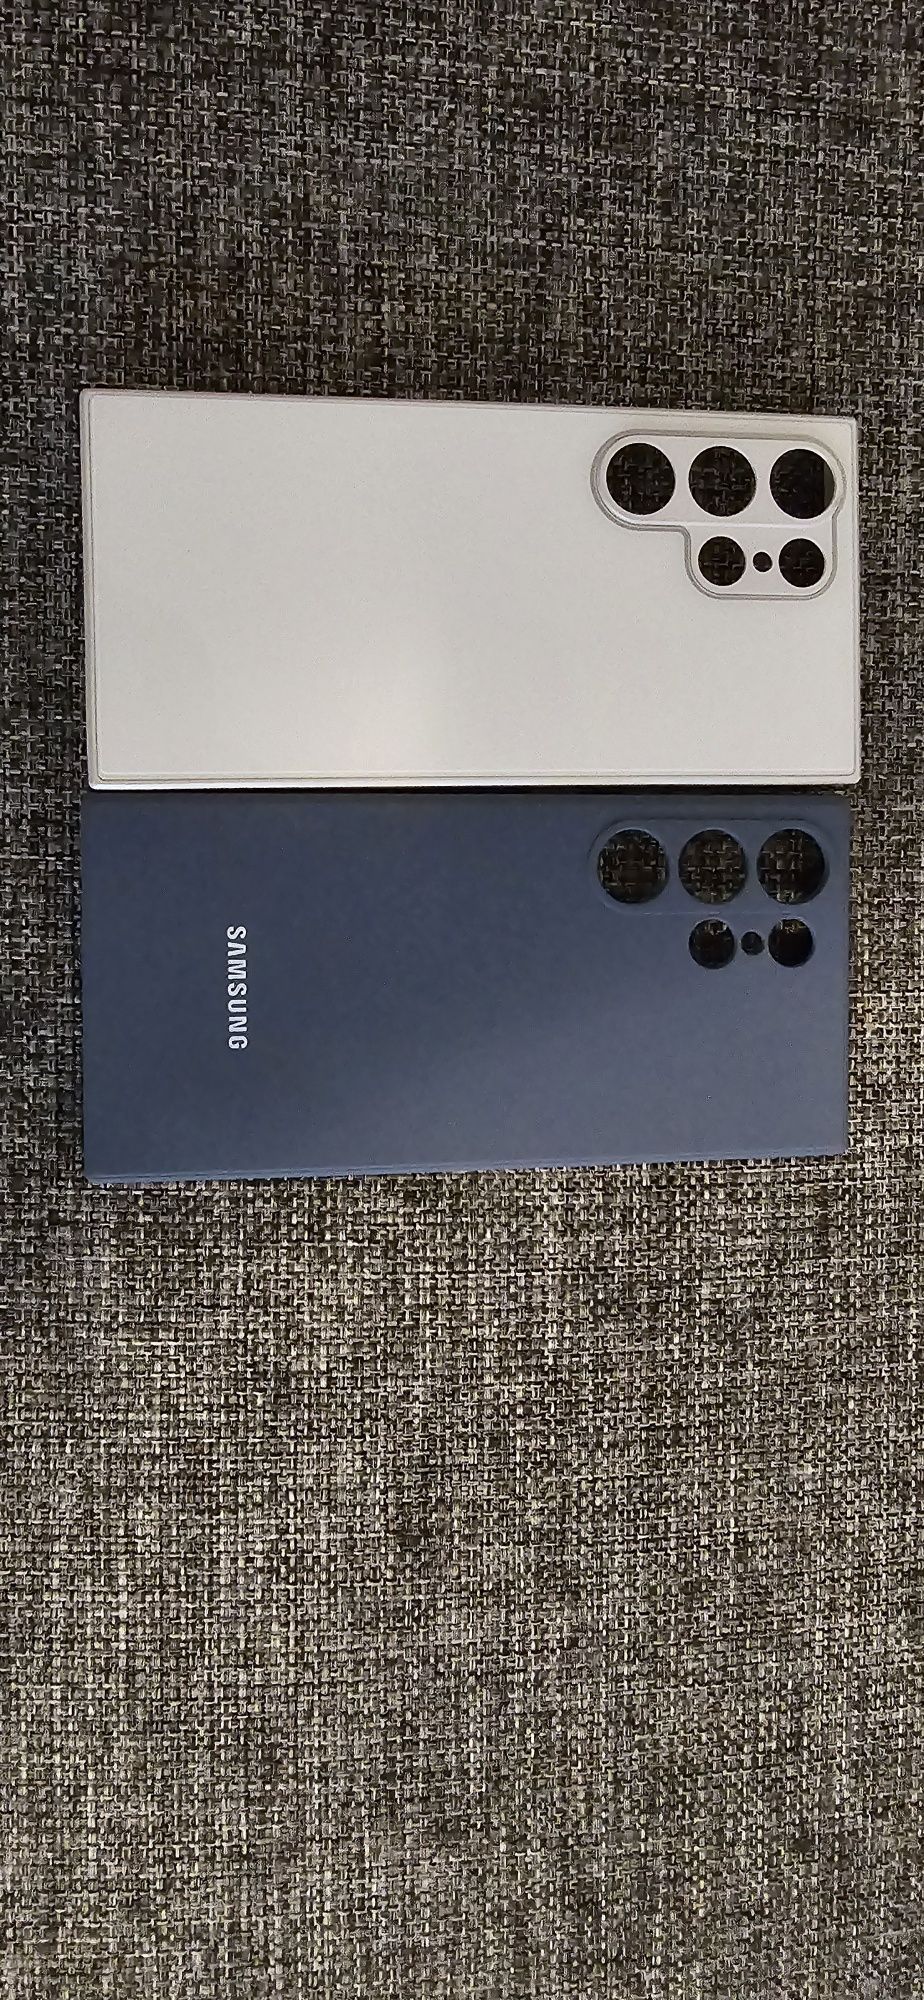 Huse Samsung Galaxy S23 Ultra